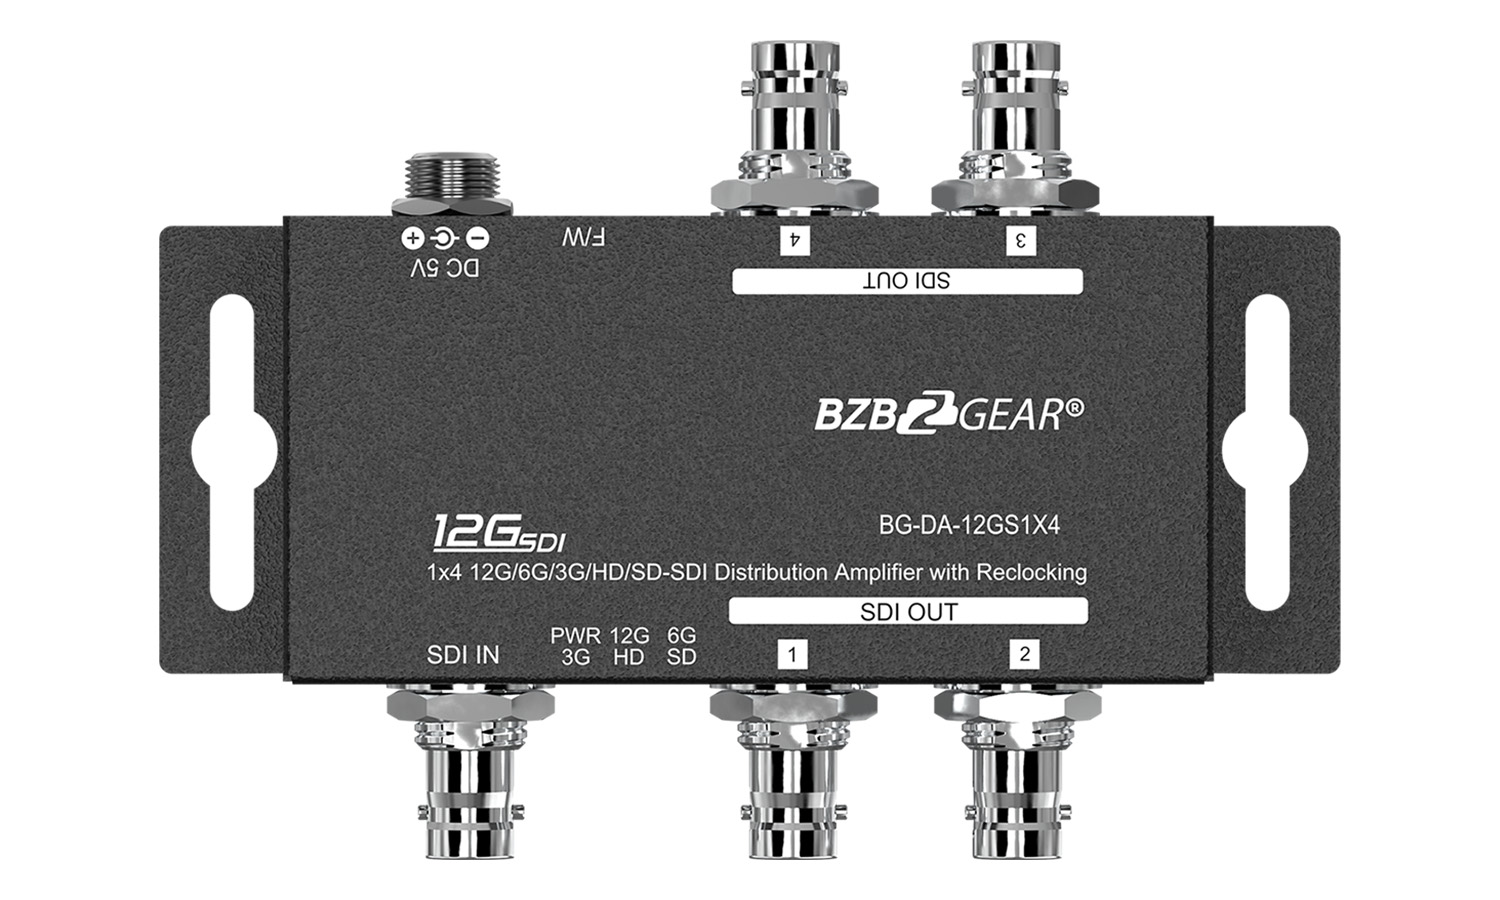 BG-DA-12GS1X4 4K UHD 12G-SDI 1x4 Splitter/Distribution Amplifier by BZBGEAR